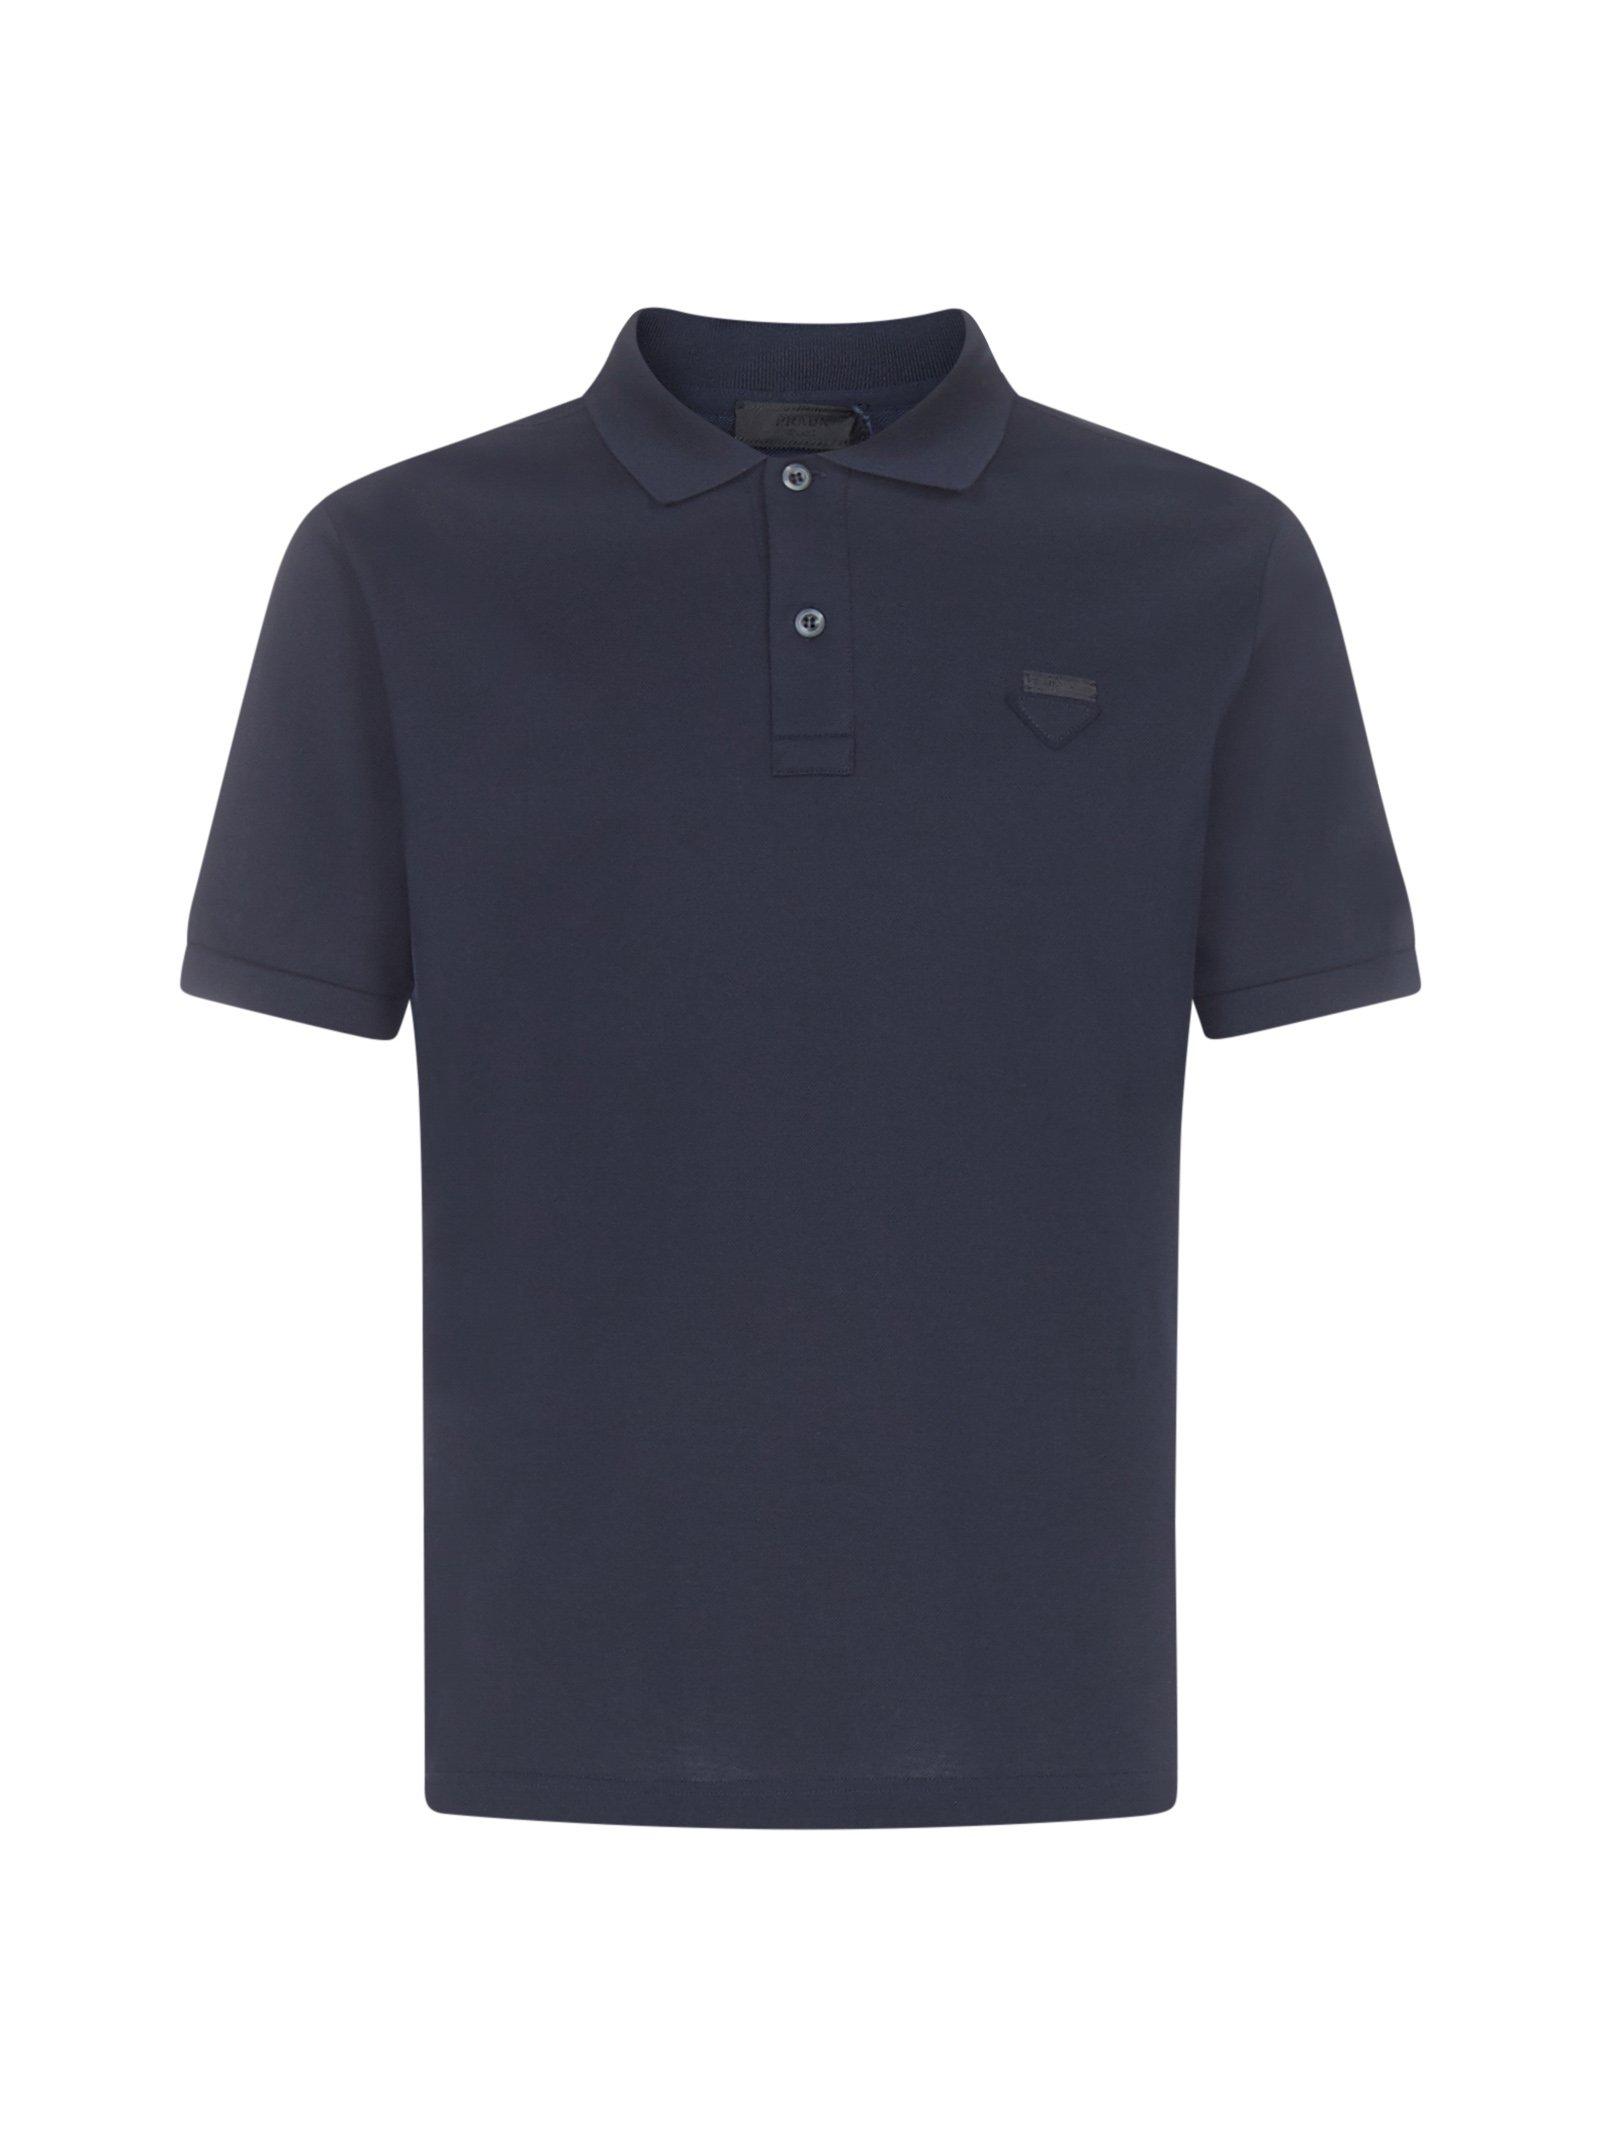 Prada Cotton Logo Patch Polo Shirt in Navy (Blue) for Men - Lyst